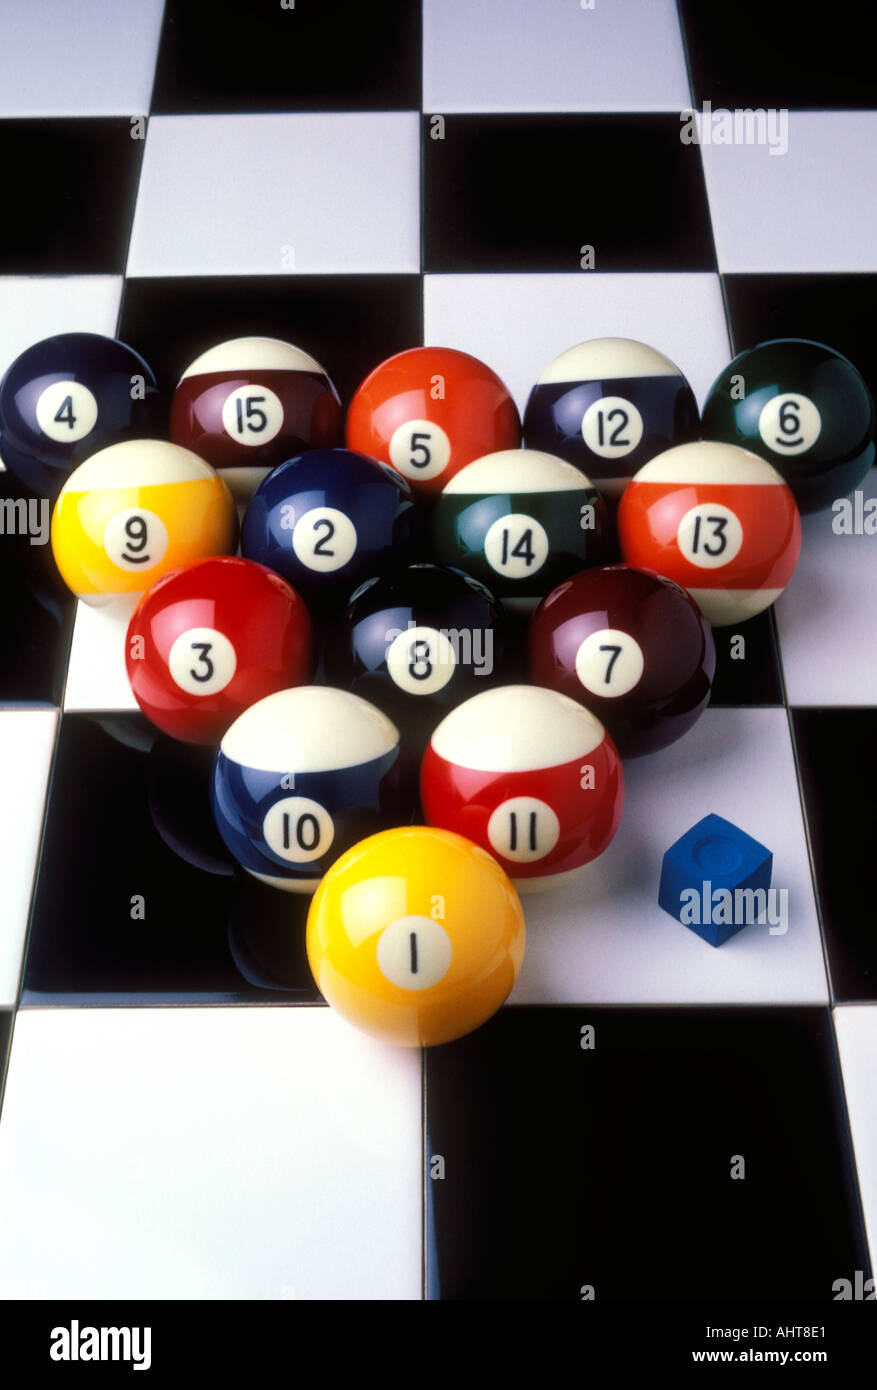 Pool balls set for break on black and white tiles Stock Photo - Alamy